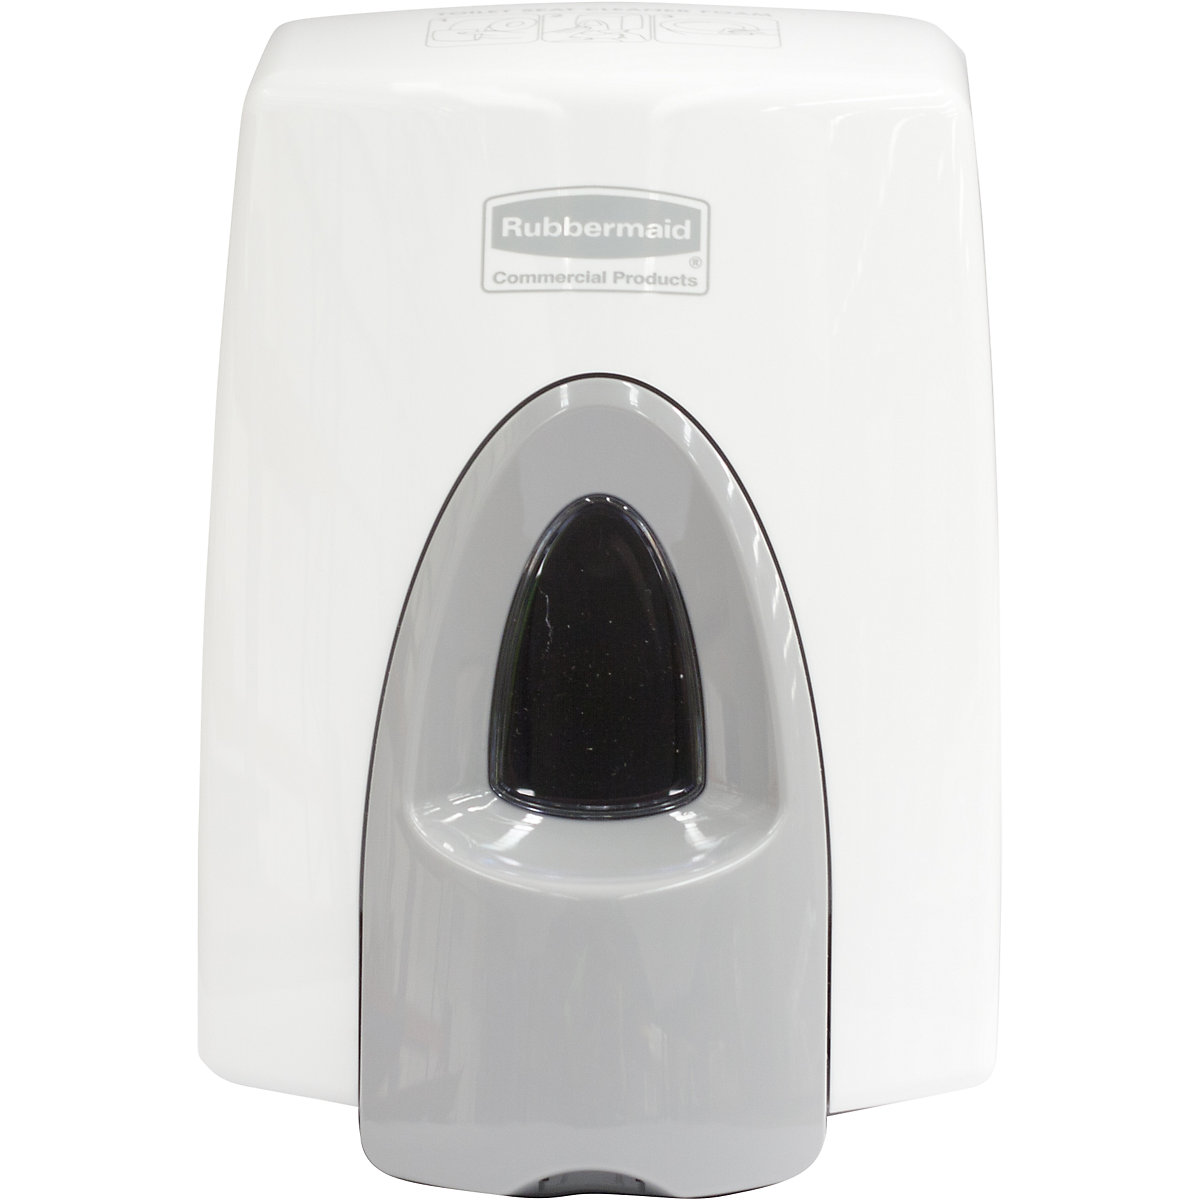 Foam dispenser for toilet seat cleaner – Rubbermaid